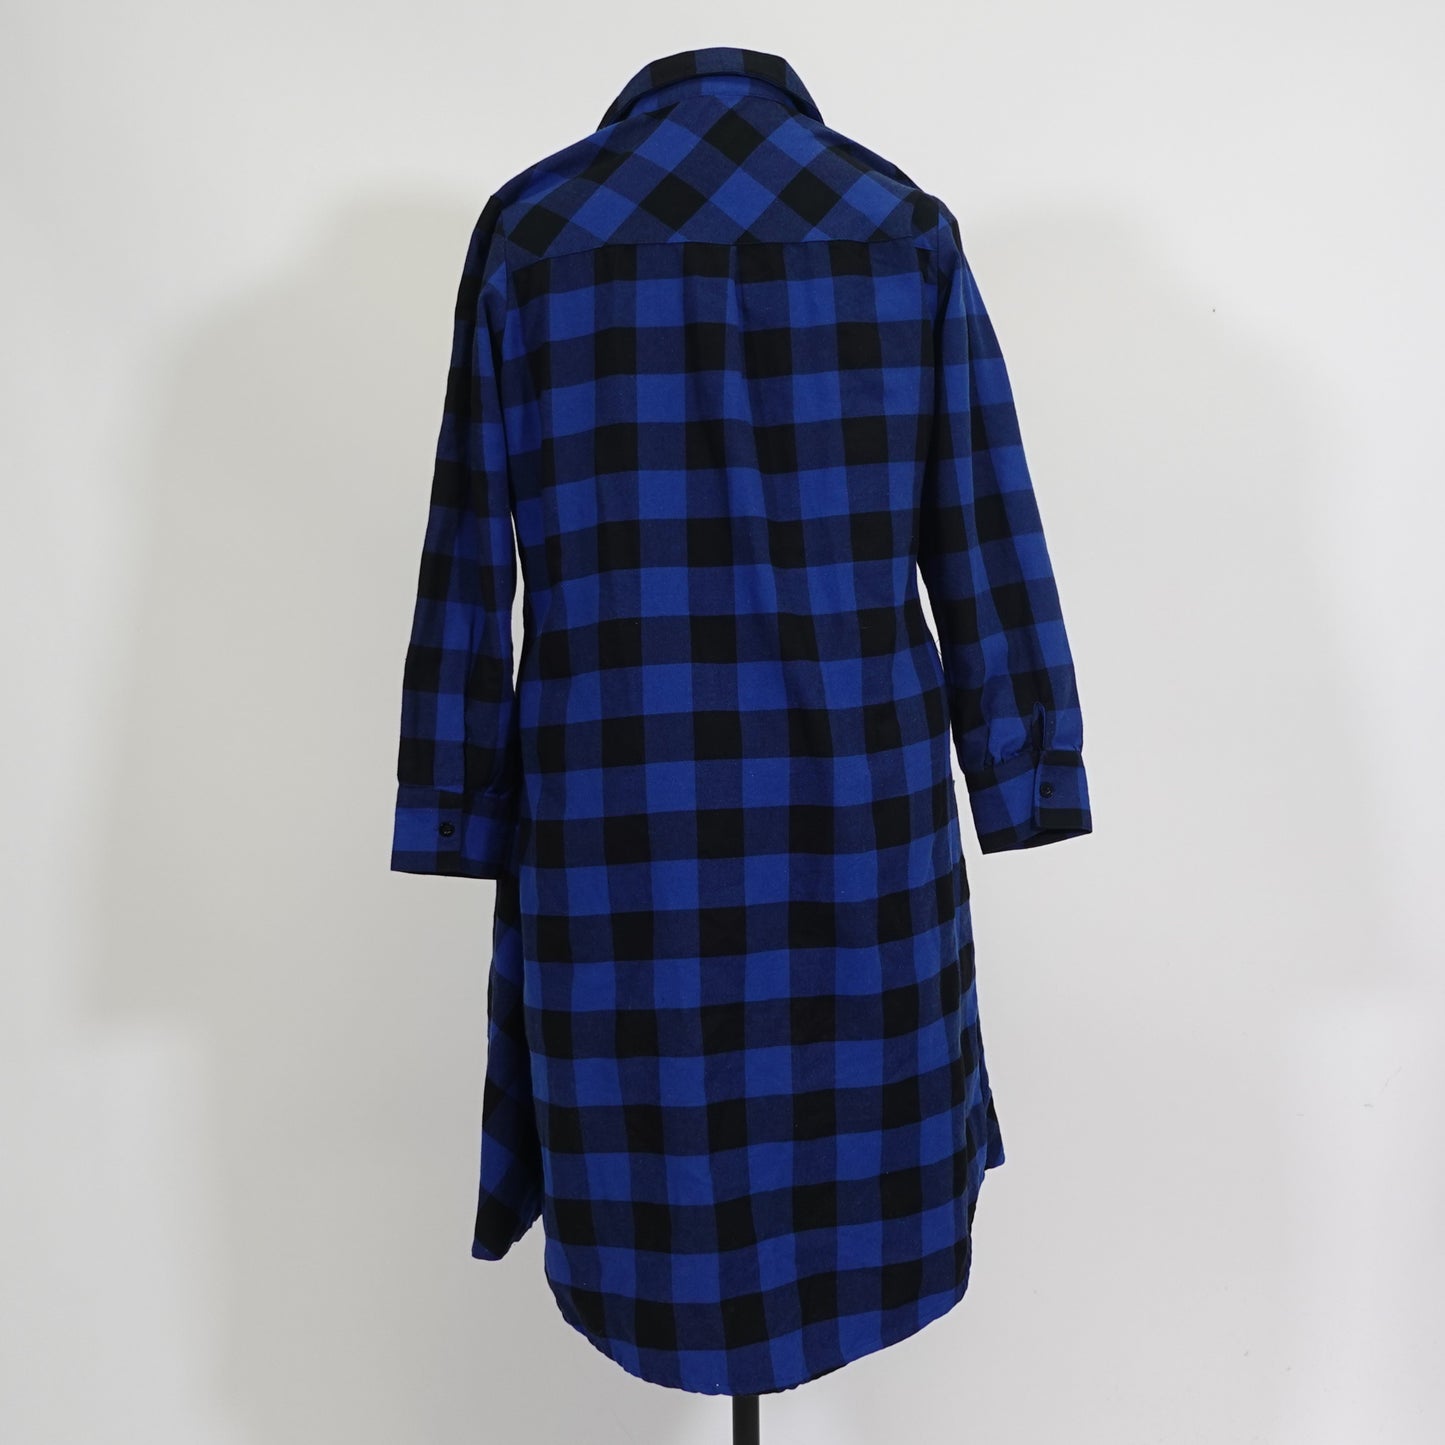 Black and Blue Plaid Flannel Shirt Dress